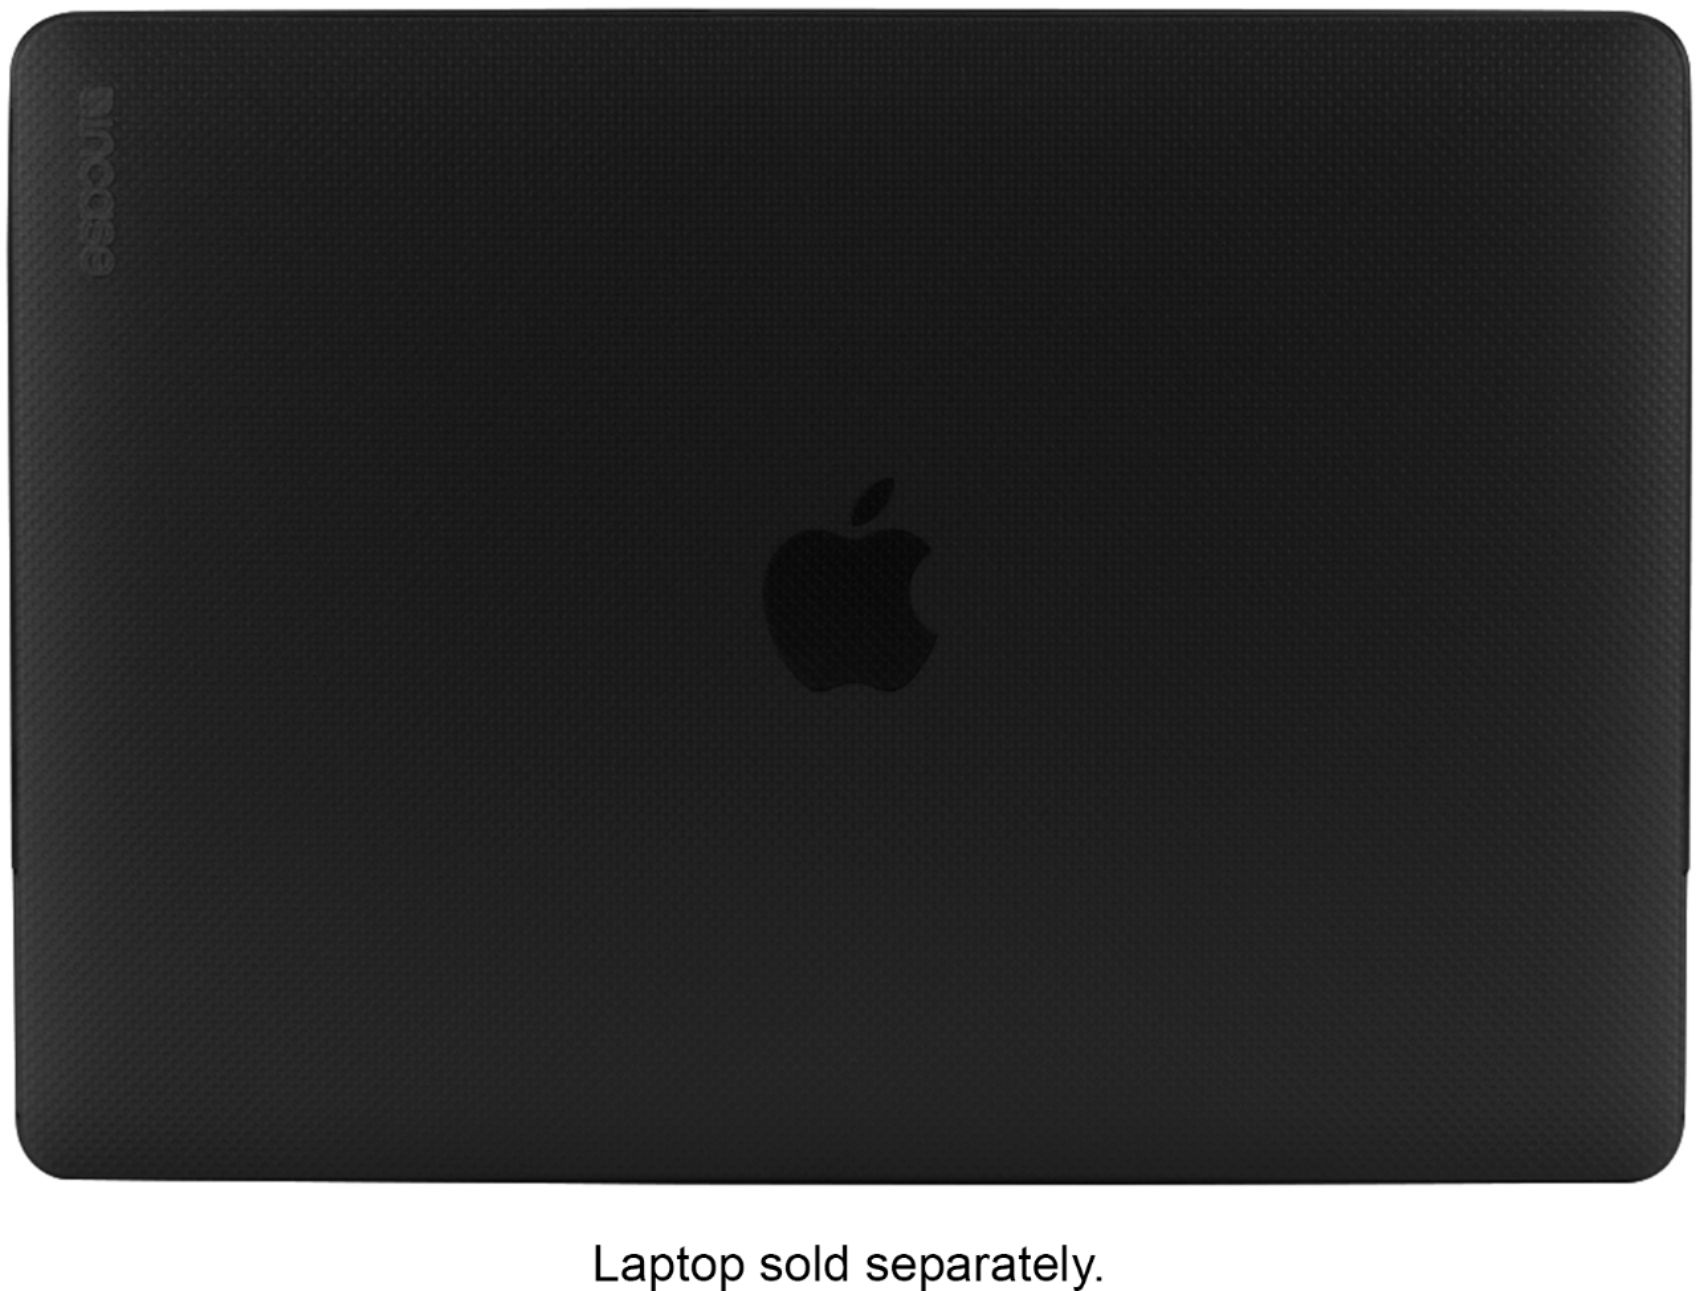 Incase - Hardshell Dot Case for the 2020 and M1 2020 13" MacBook Pro - Black